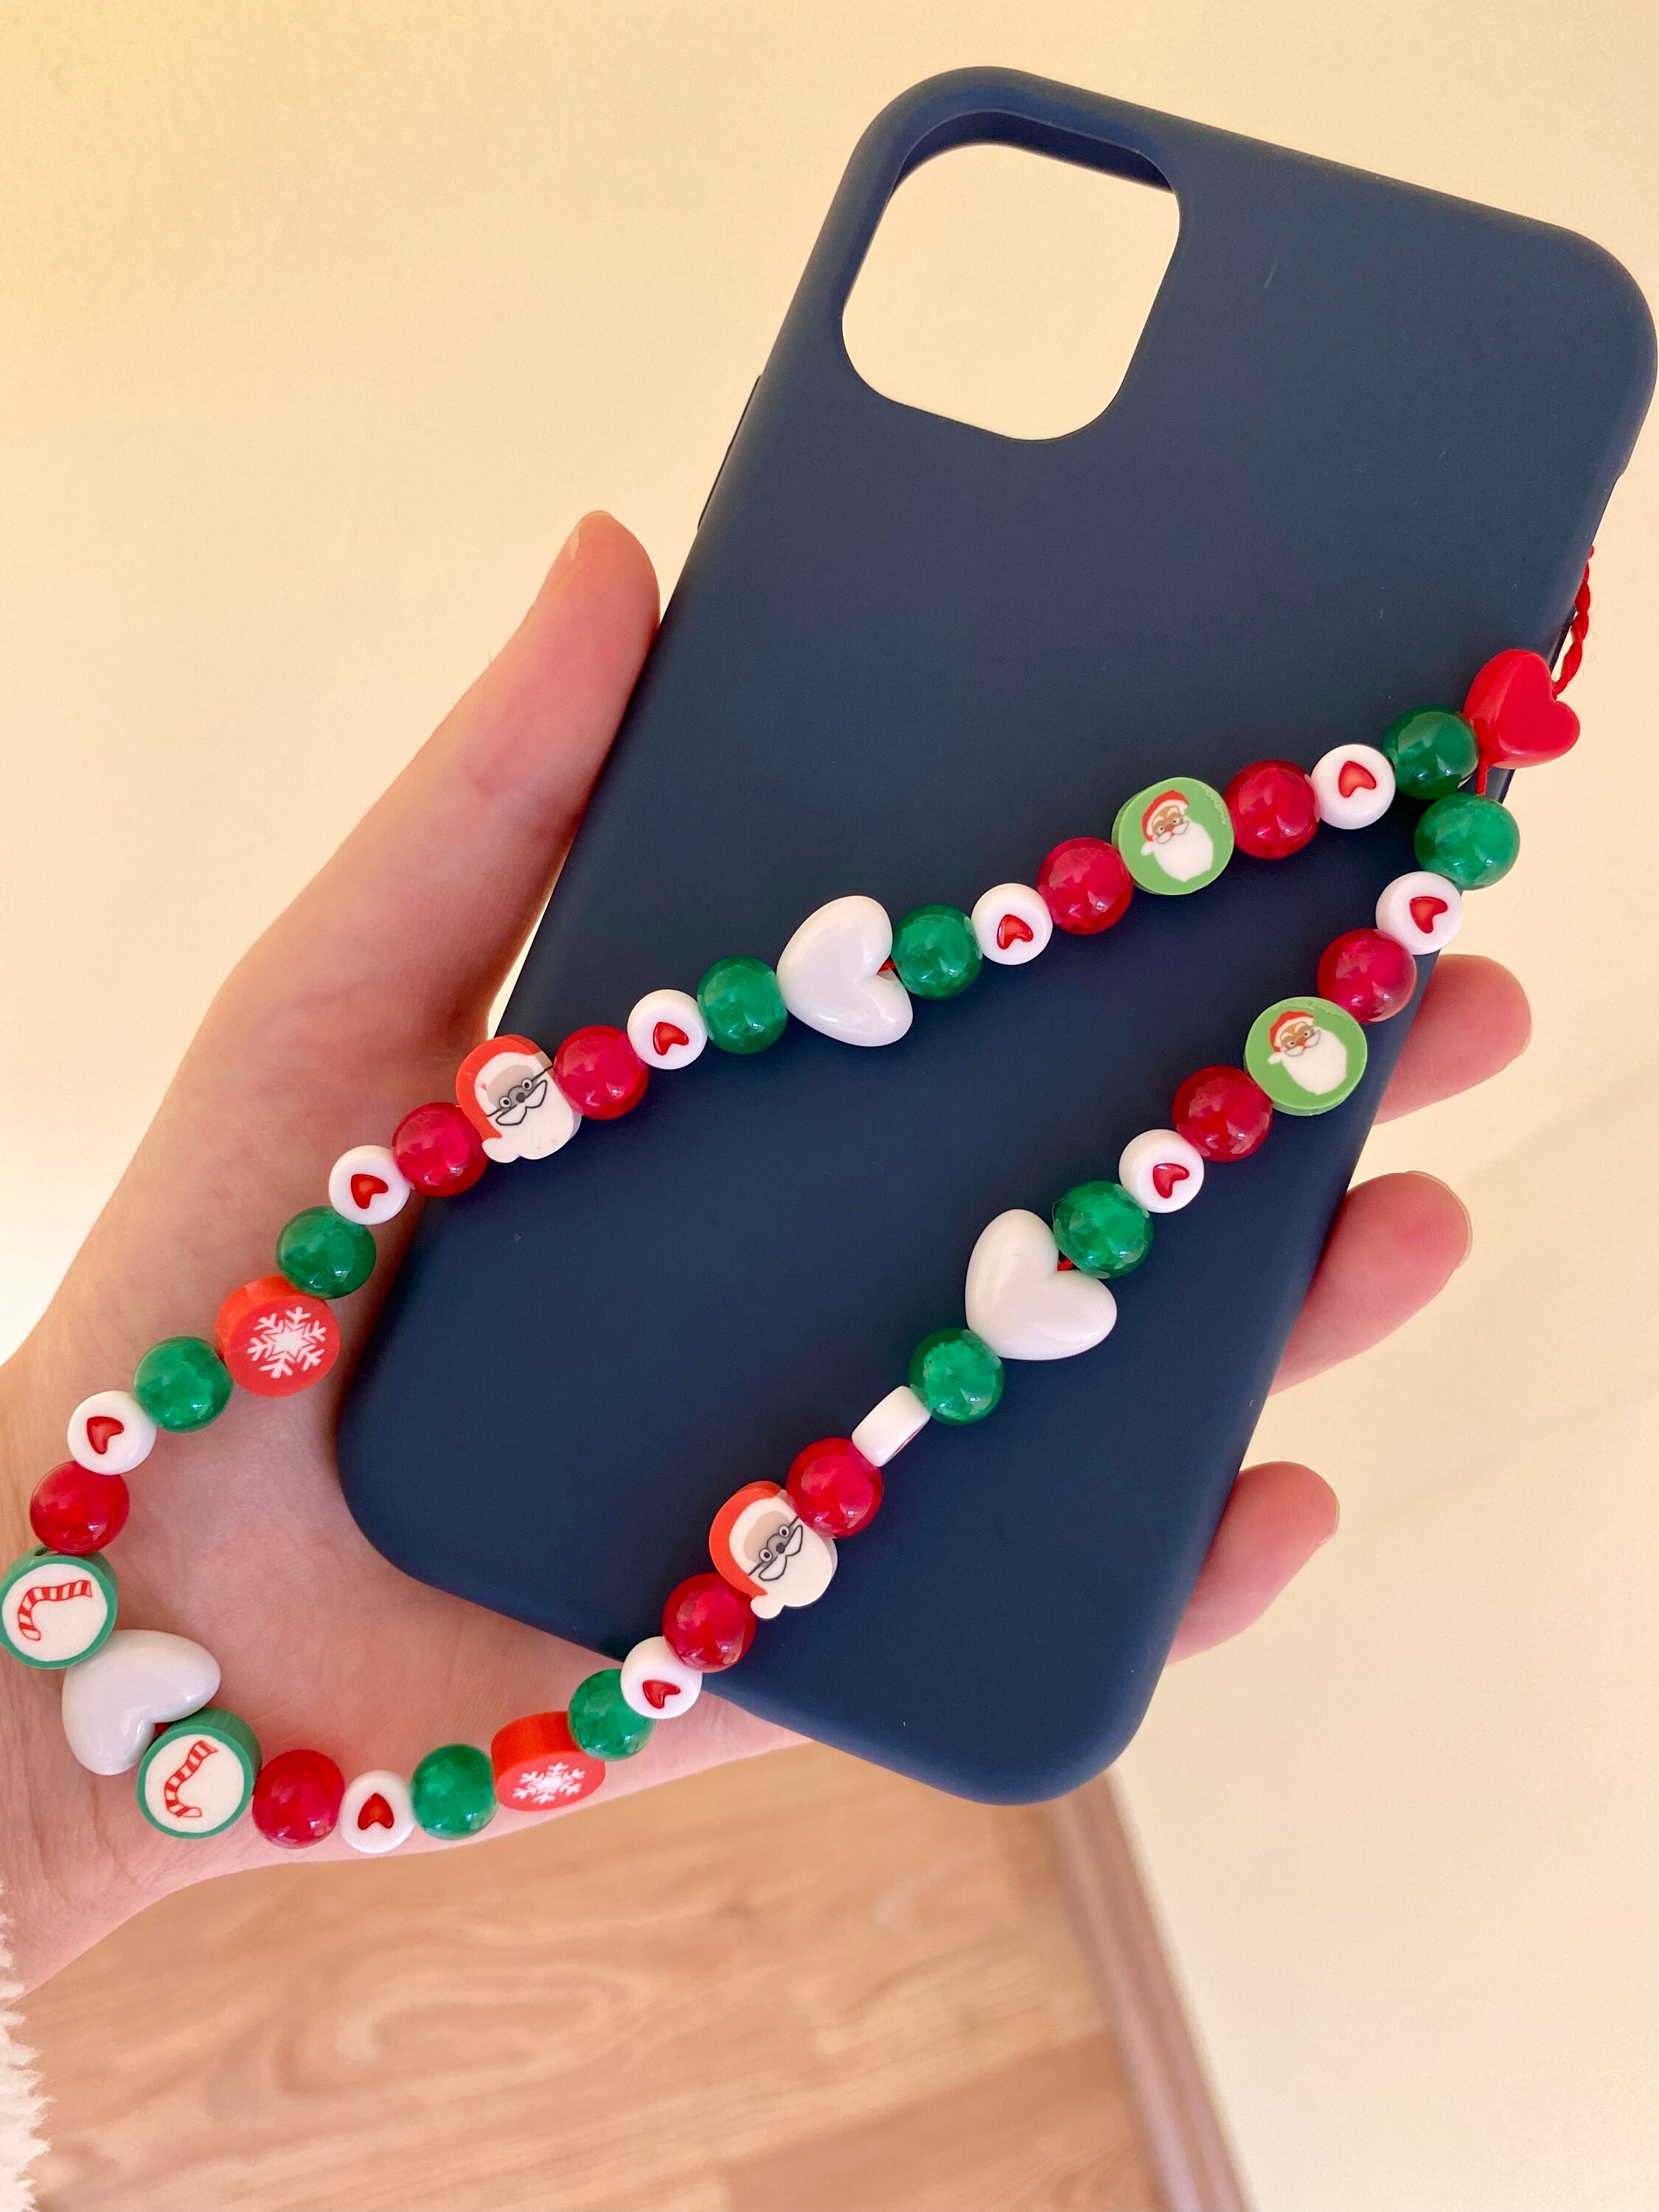 Aventurine Gemstone Crystal Beads Phone Charm, Personalized Phone Strap,  Evil Eye Beaded Phone Charm, Pearl Beaded Phone Chain,healing Gift 